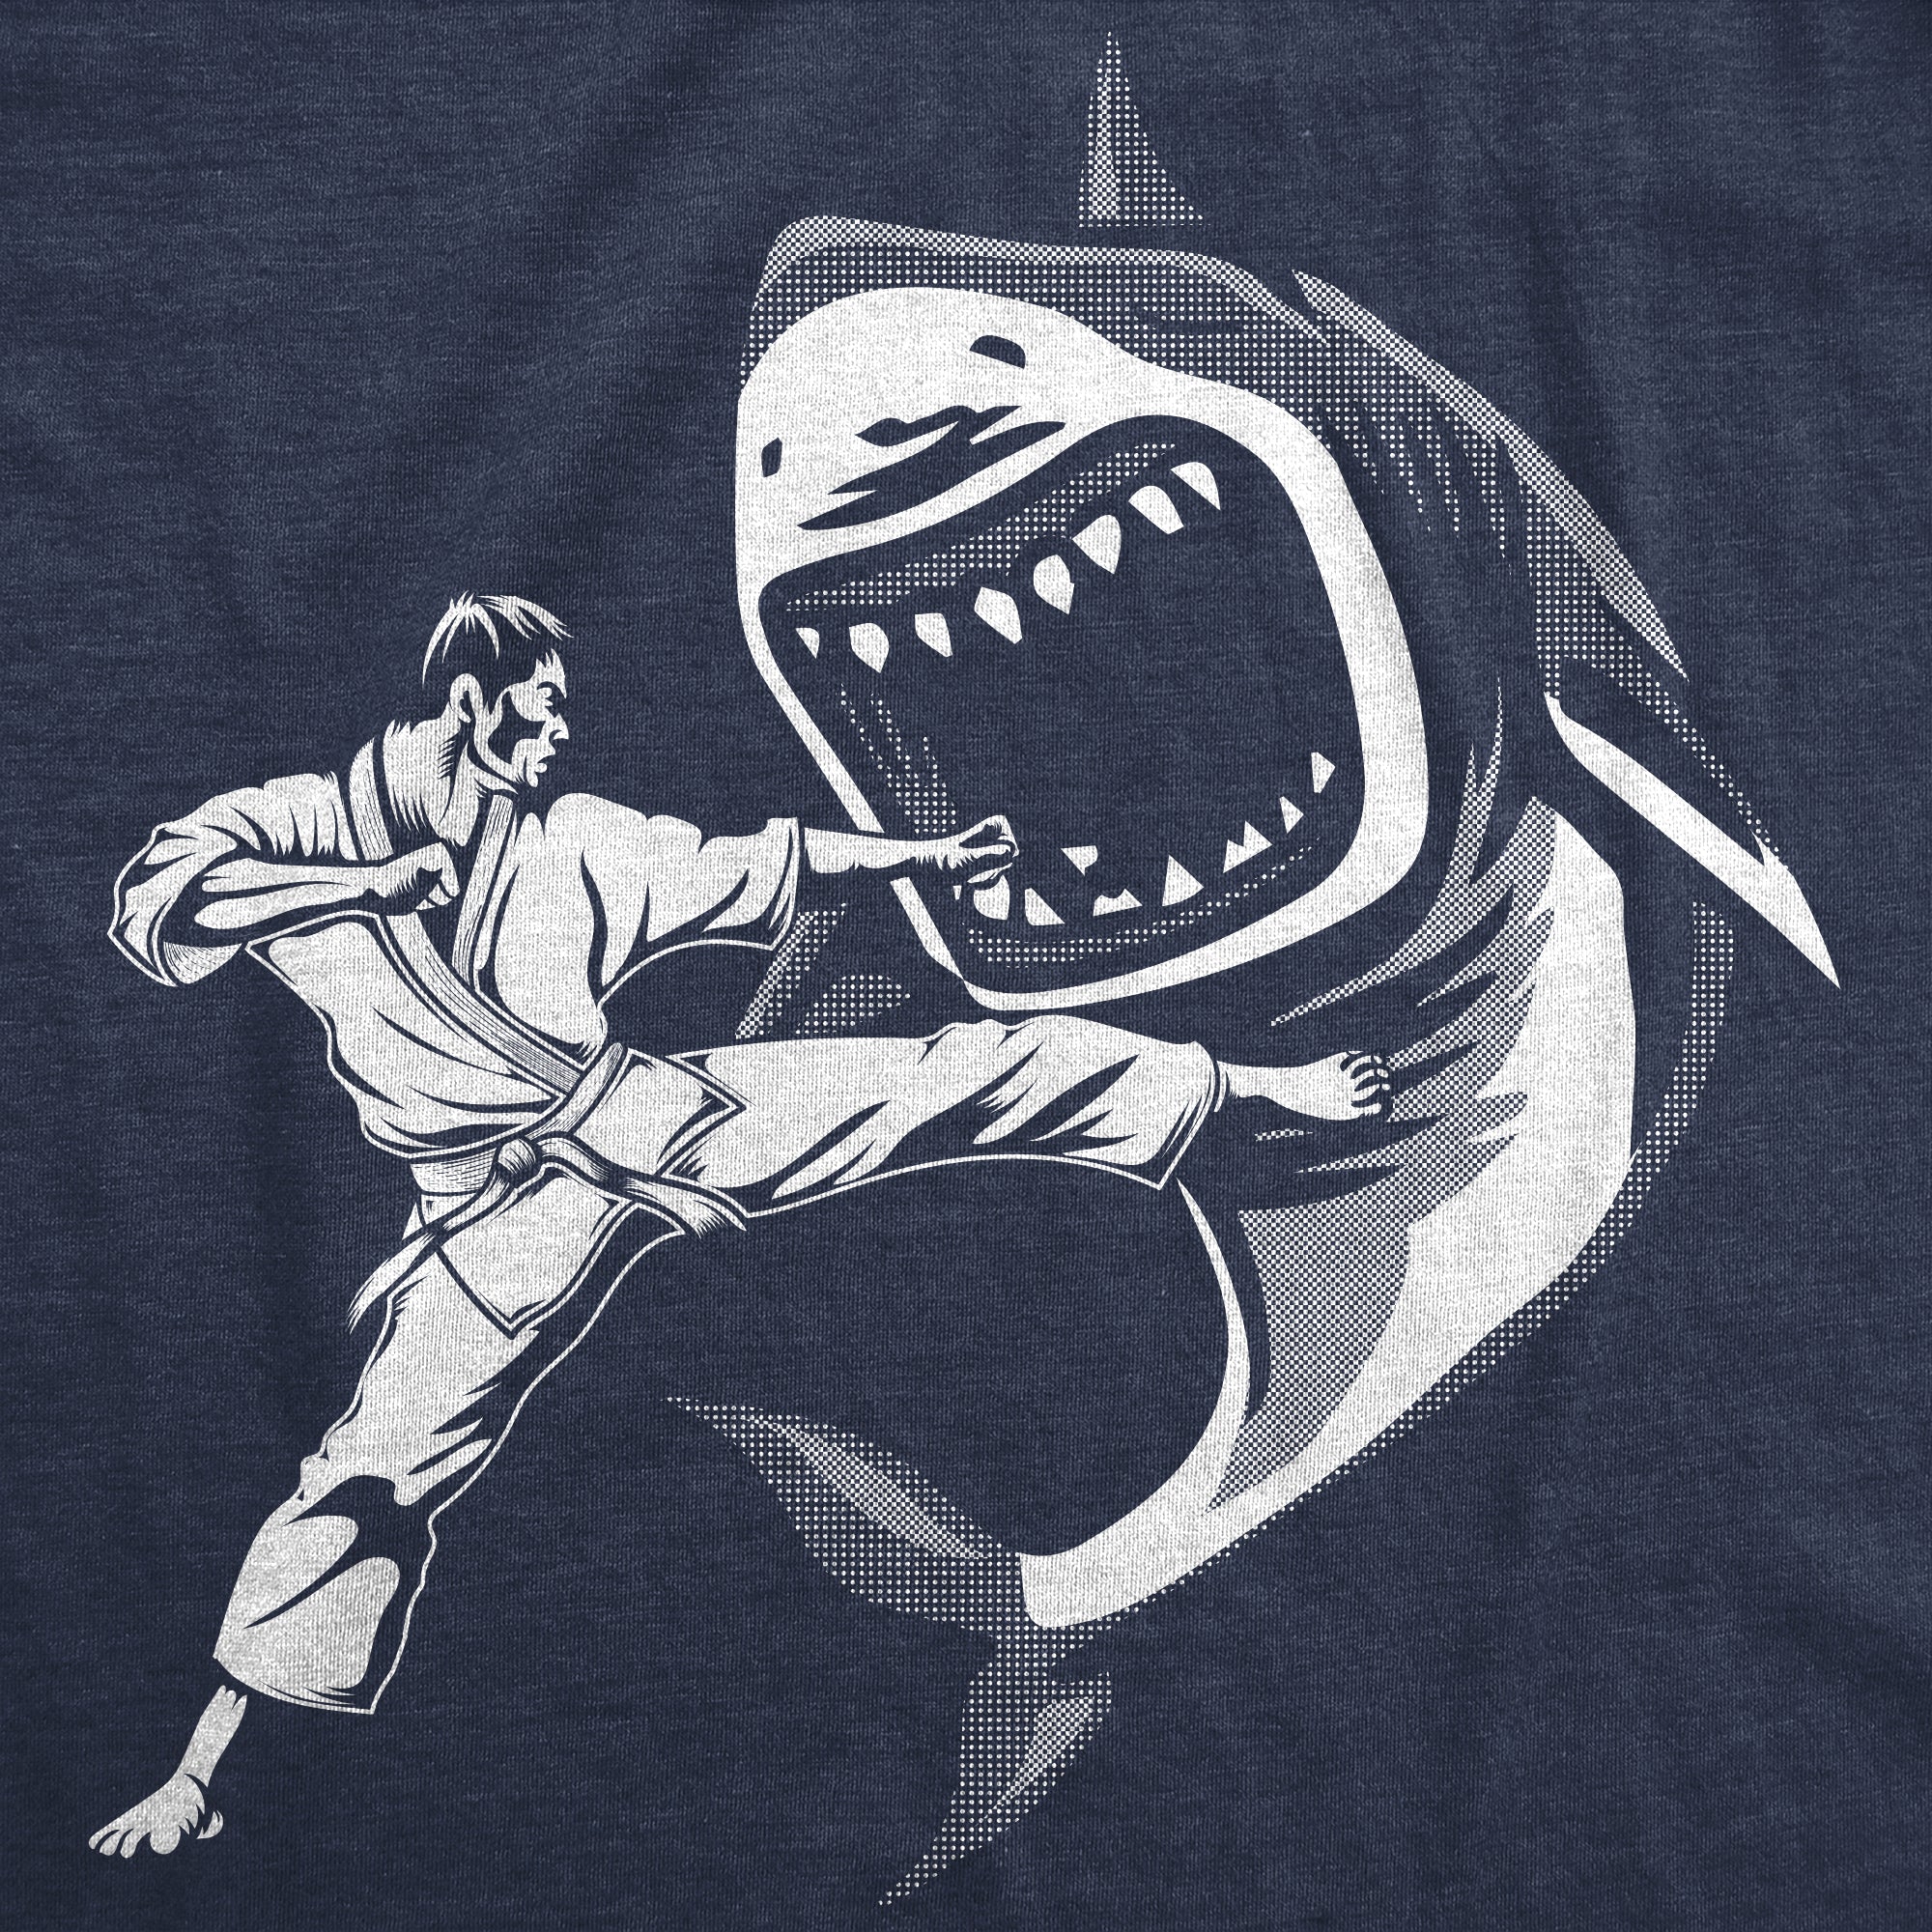 Funny Heather Navy - Karate Kicked Shark Karate Kicked Shark Womens T Shirt Nerdy animal sarcastic Tee